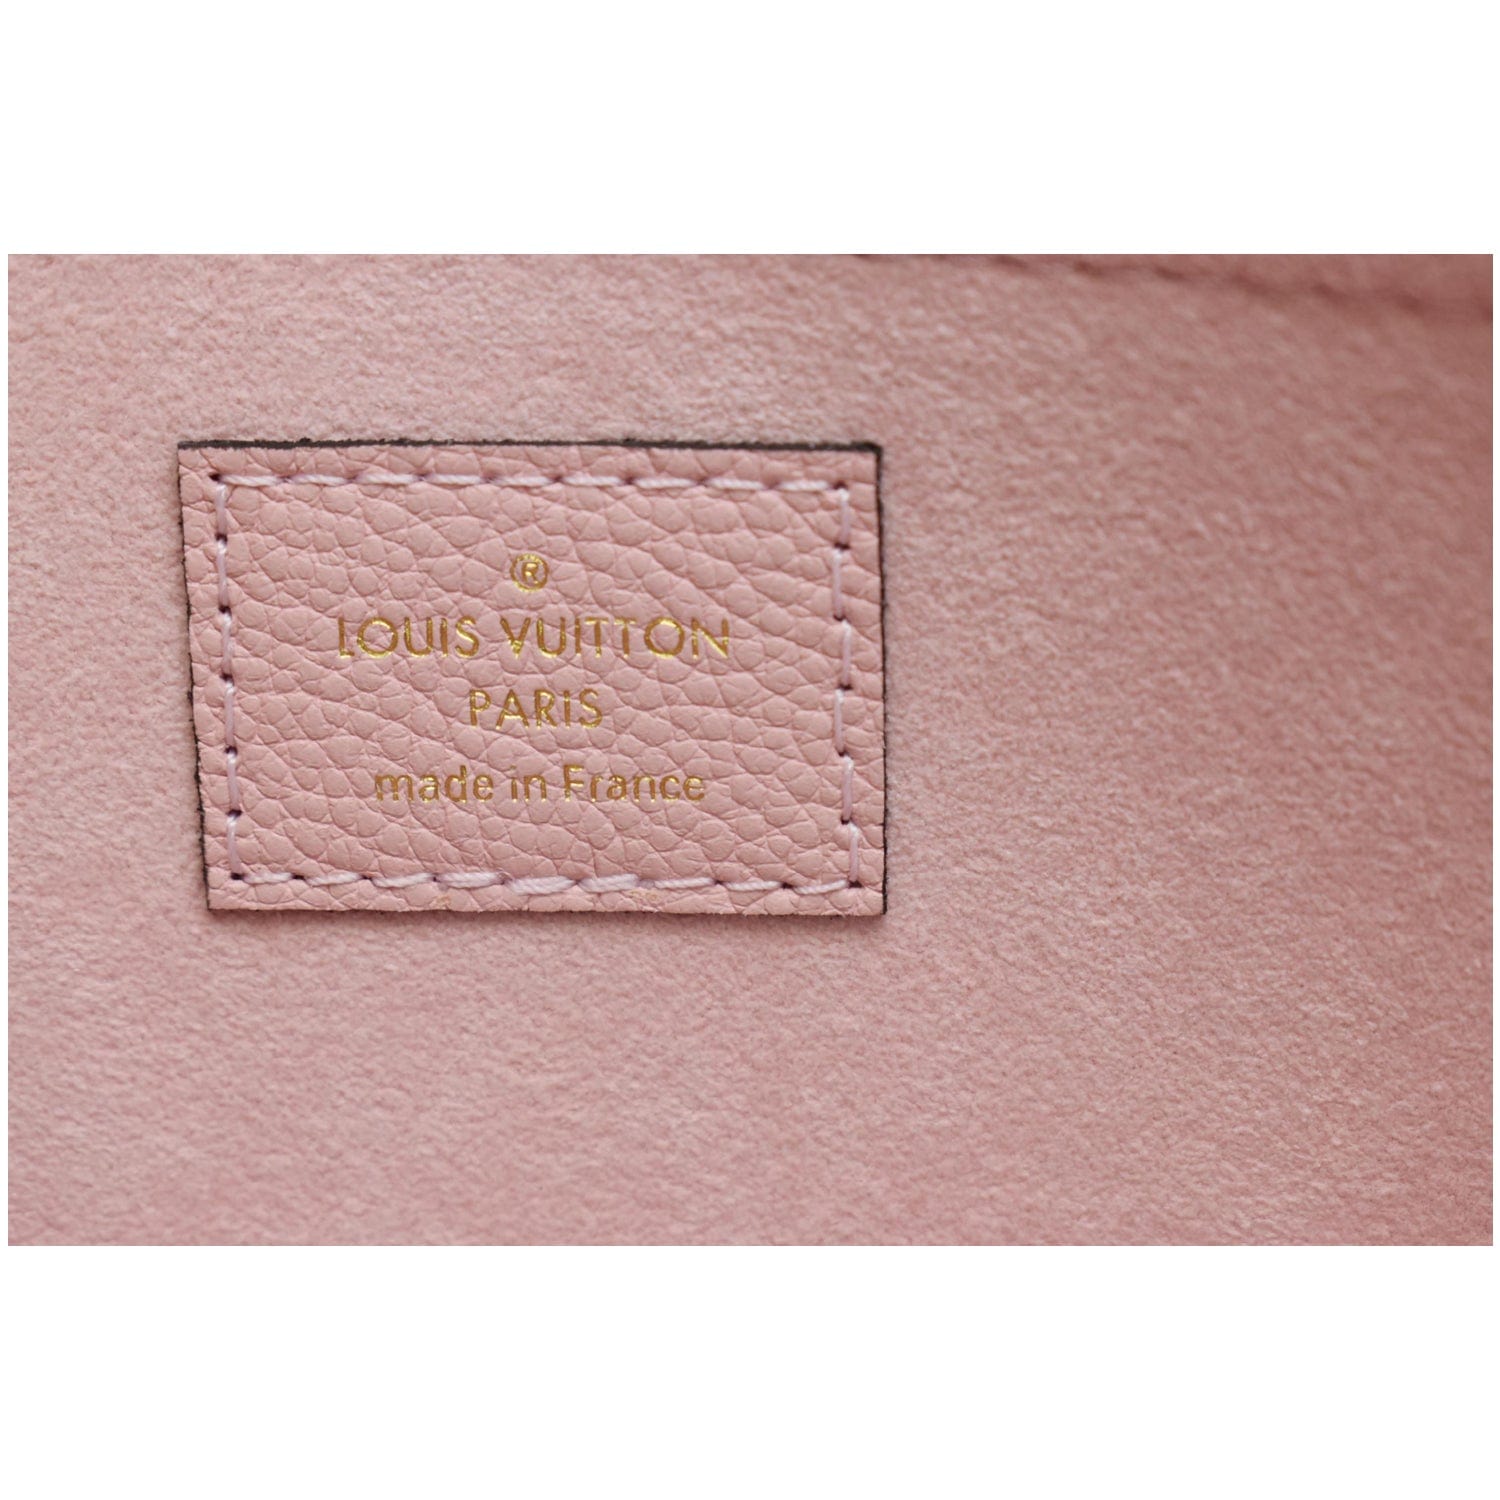 Louis Vuitton Pink Clutch Bag